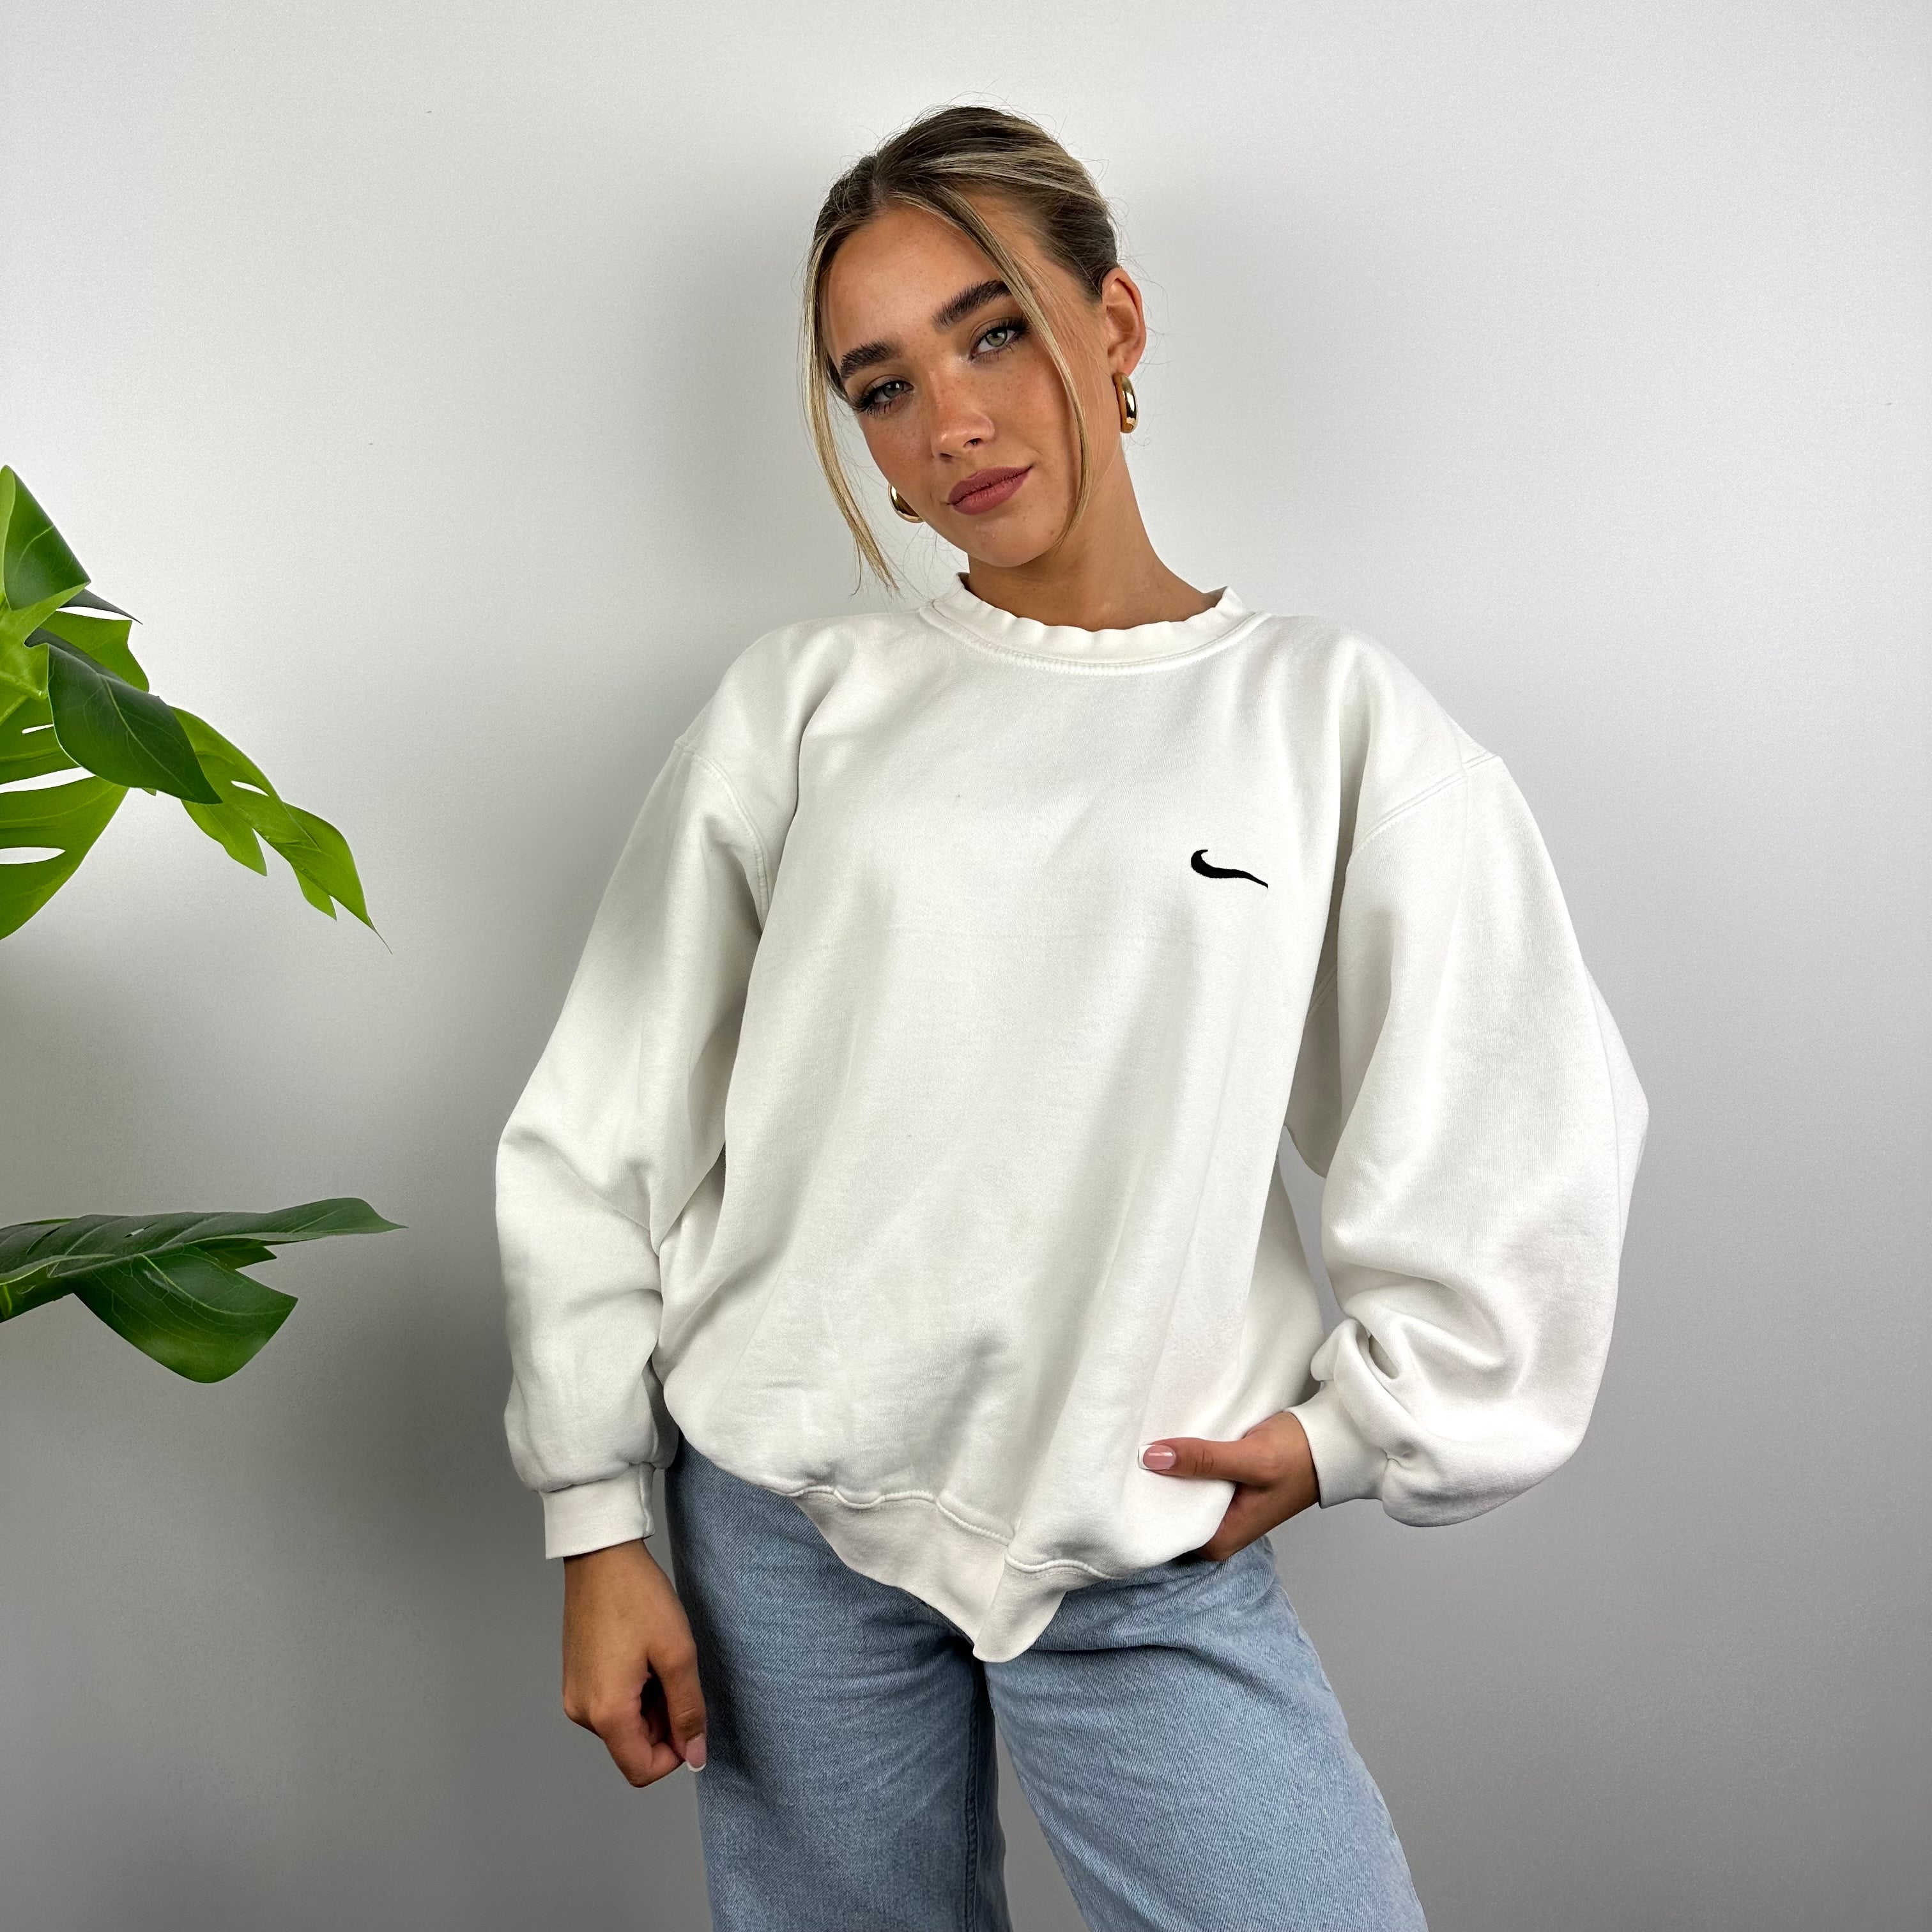 Nike RARE White Embroidered Swoosh Sweatshirt (S)